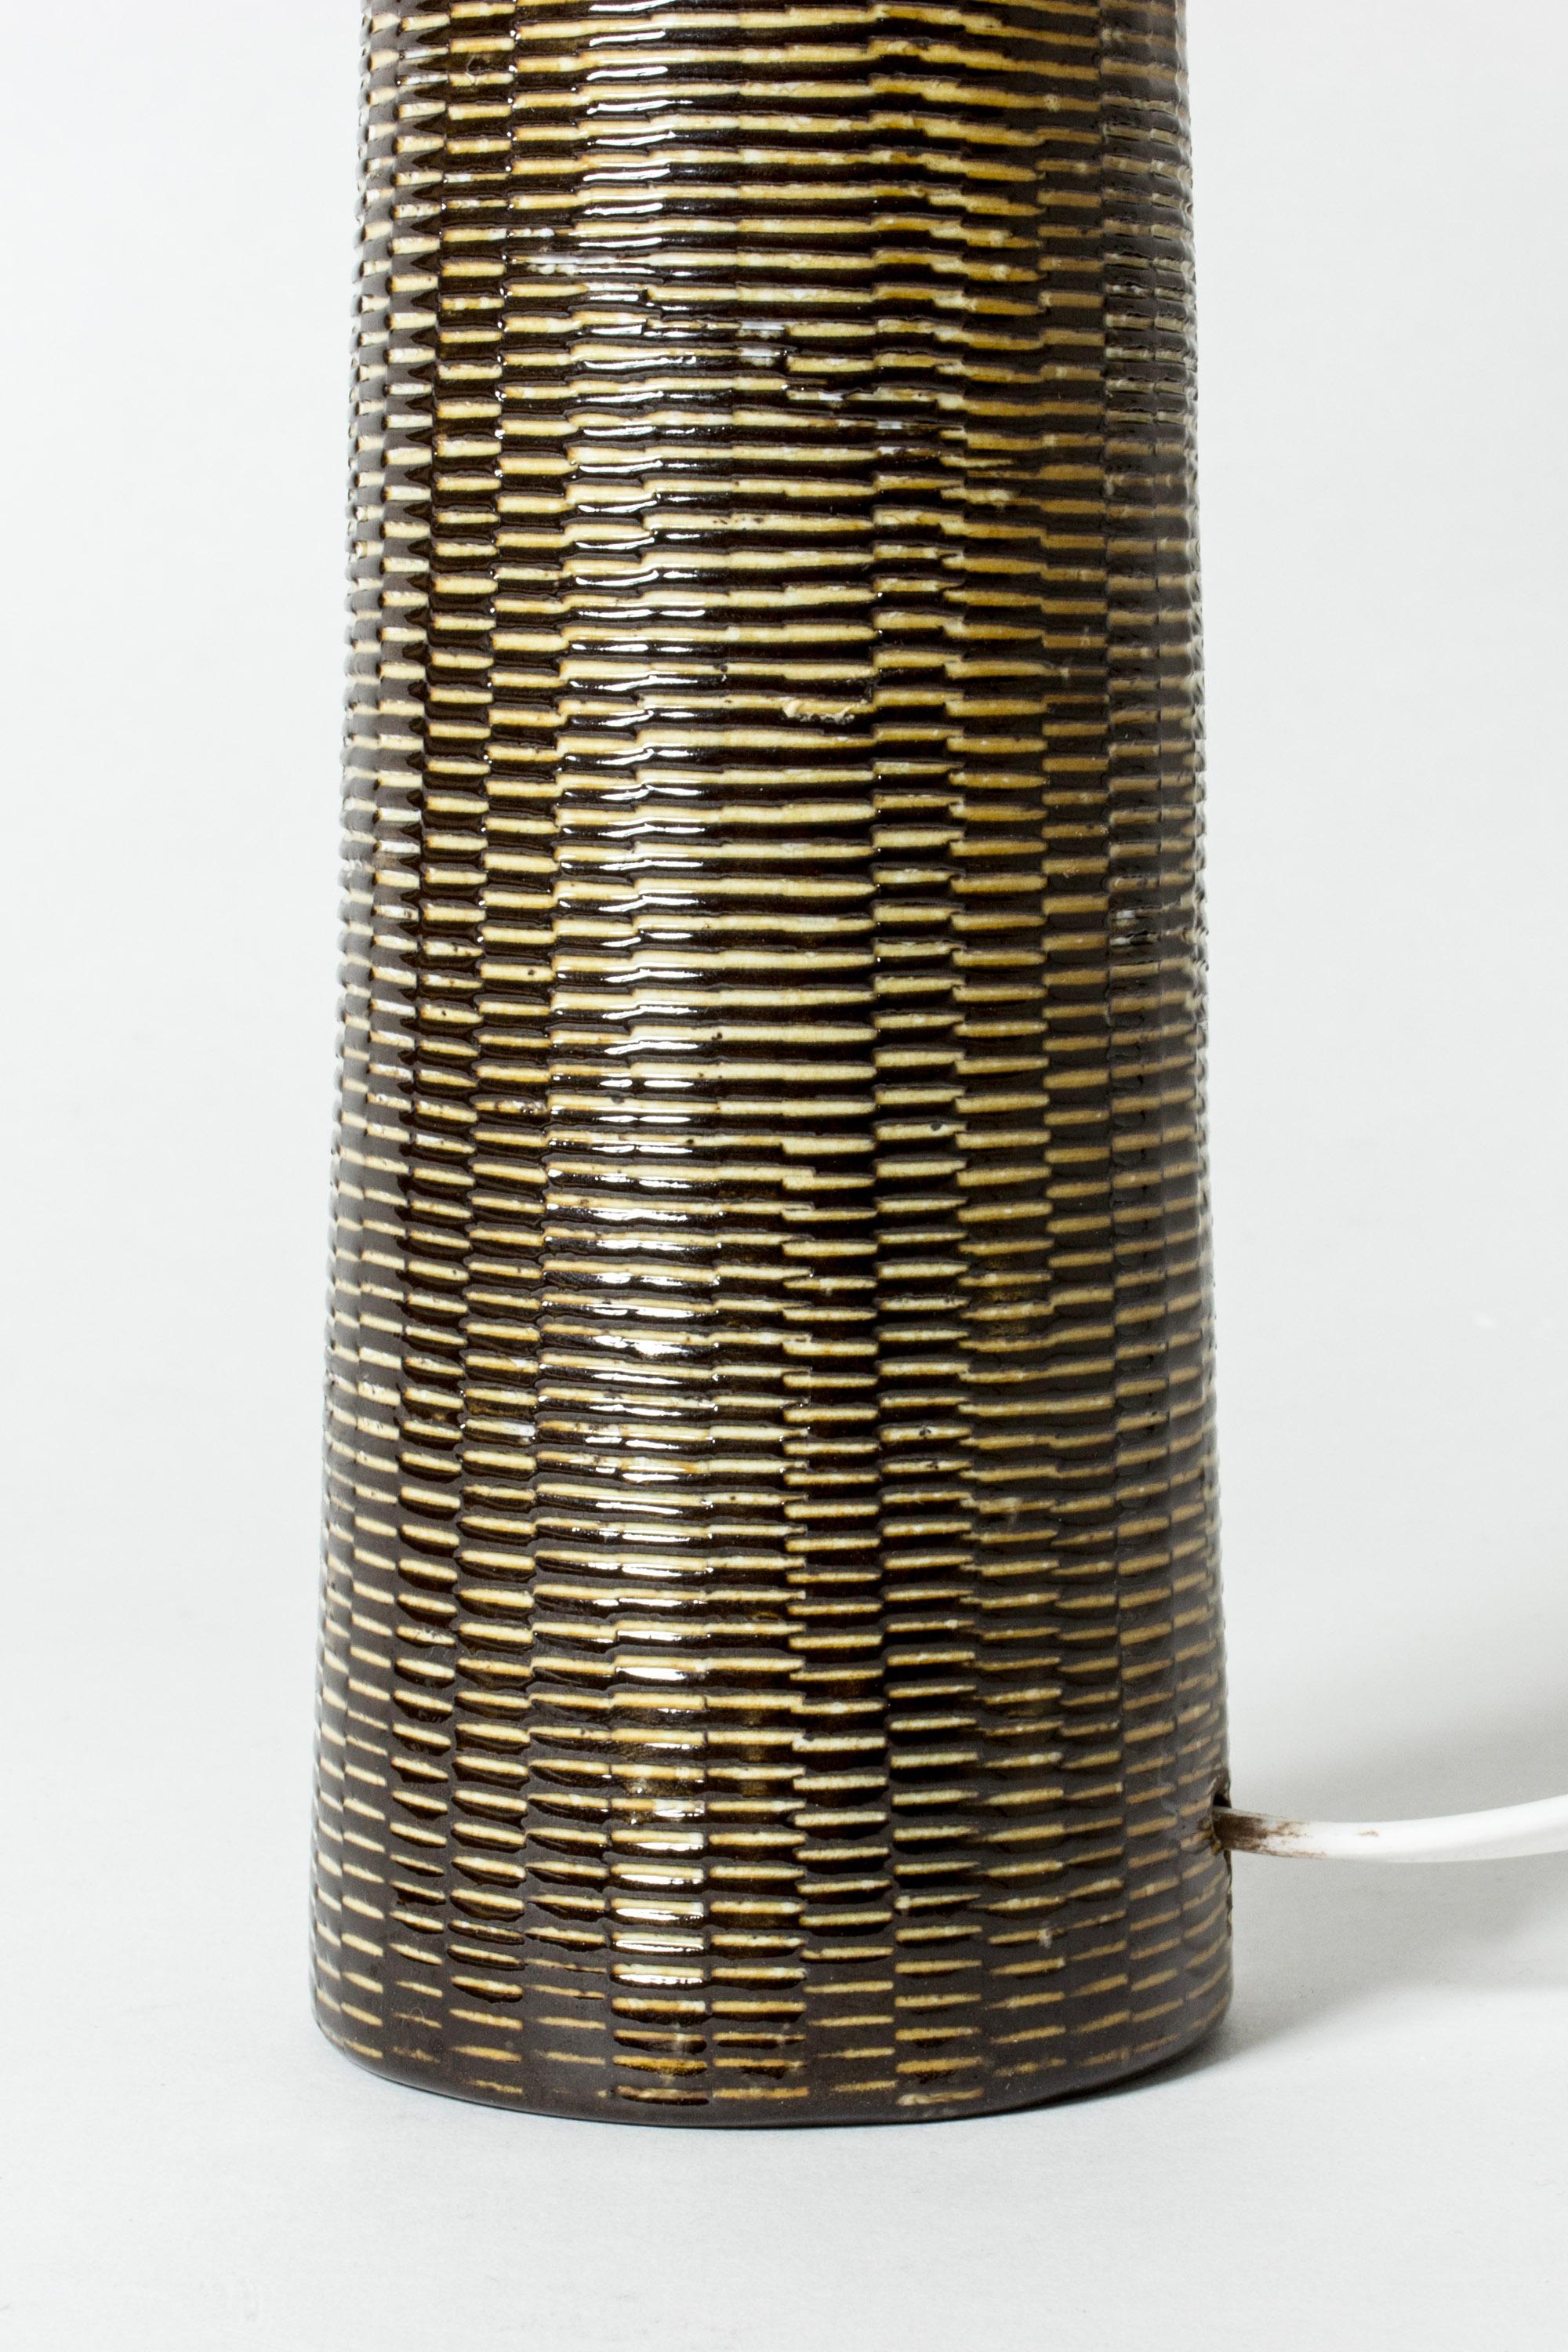 Swedish Midcentury Ceramic Table lamp by Ingrid Atterberg, Upsala Ekeby, Sweden, 1950s